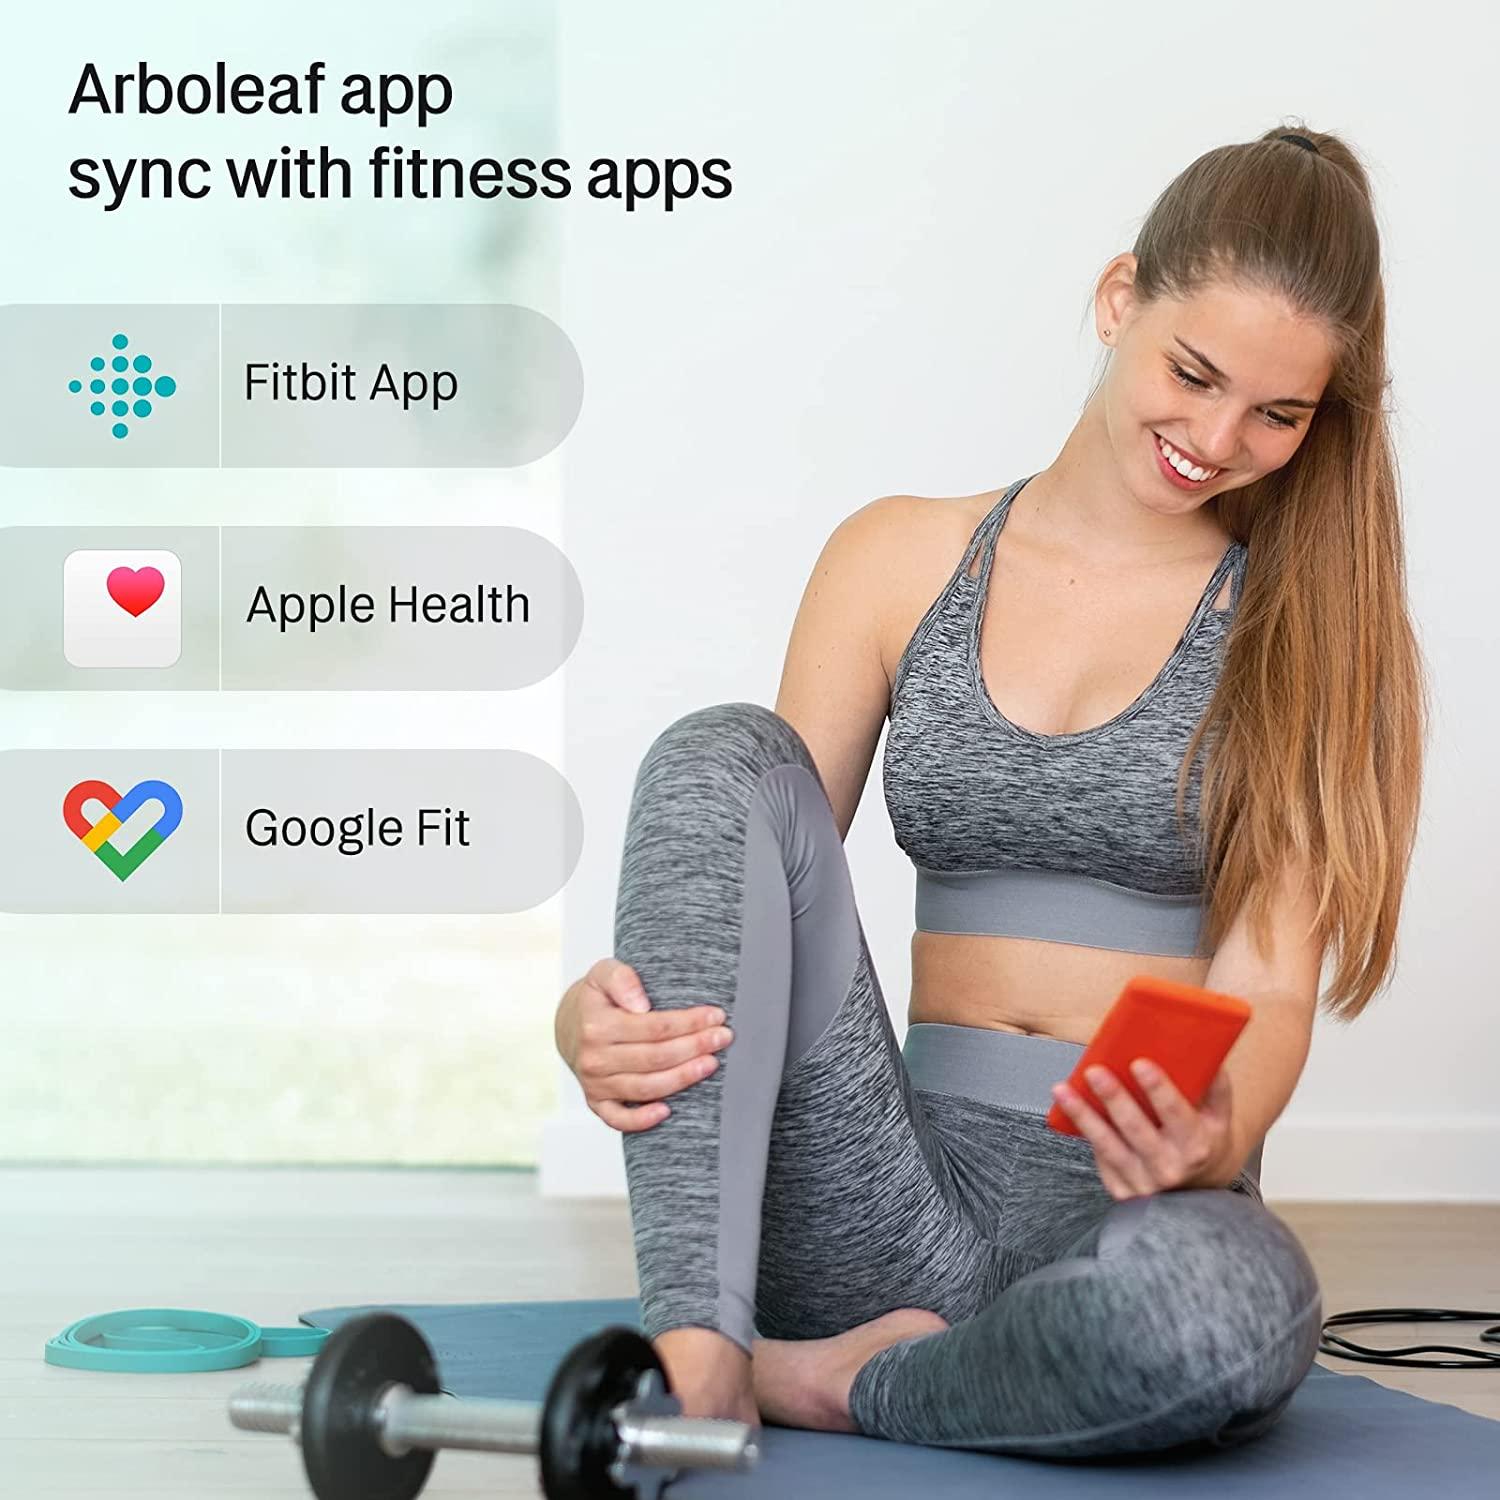 arboleaf on the App Store